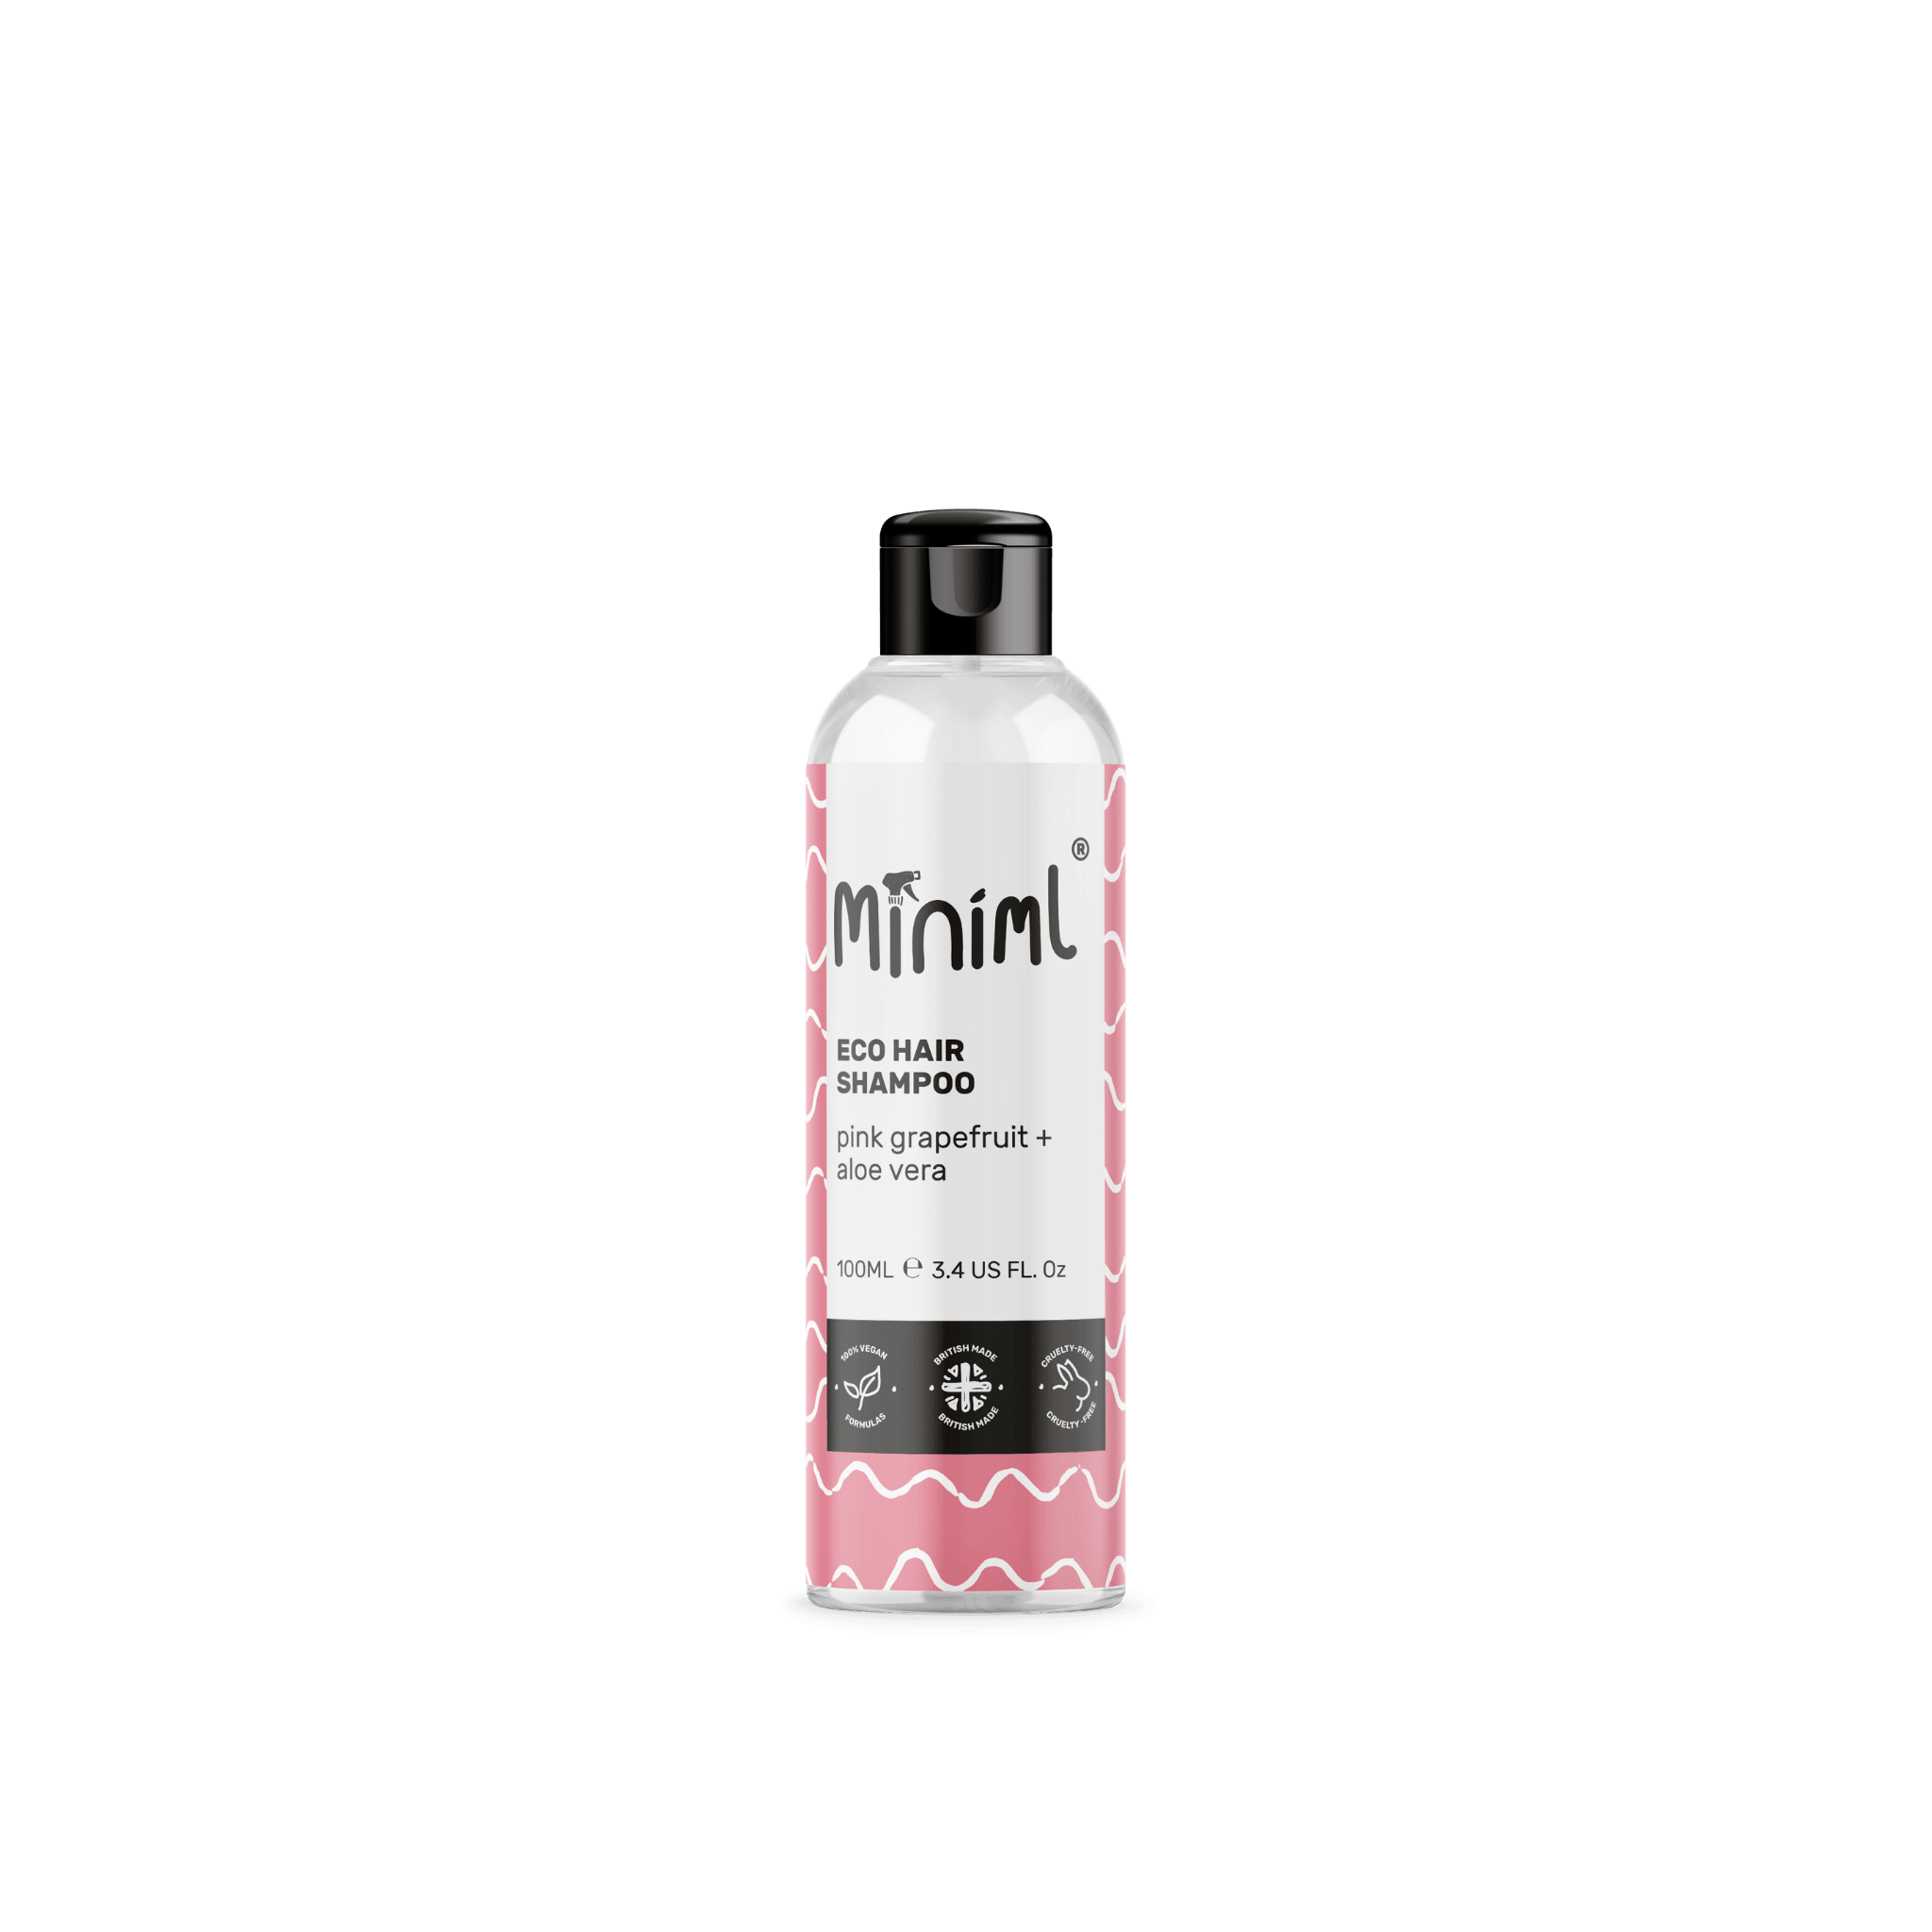 Miniml - Eco Friendly - Hair Shampoo - Pink Grapefruit + Aloe Vera -100ml - Vending Superstore